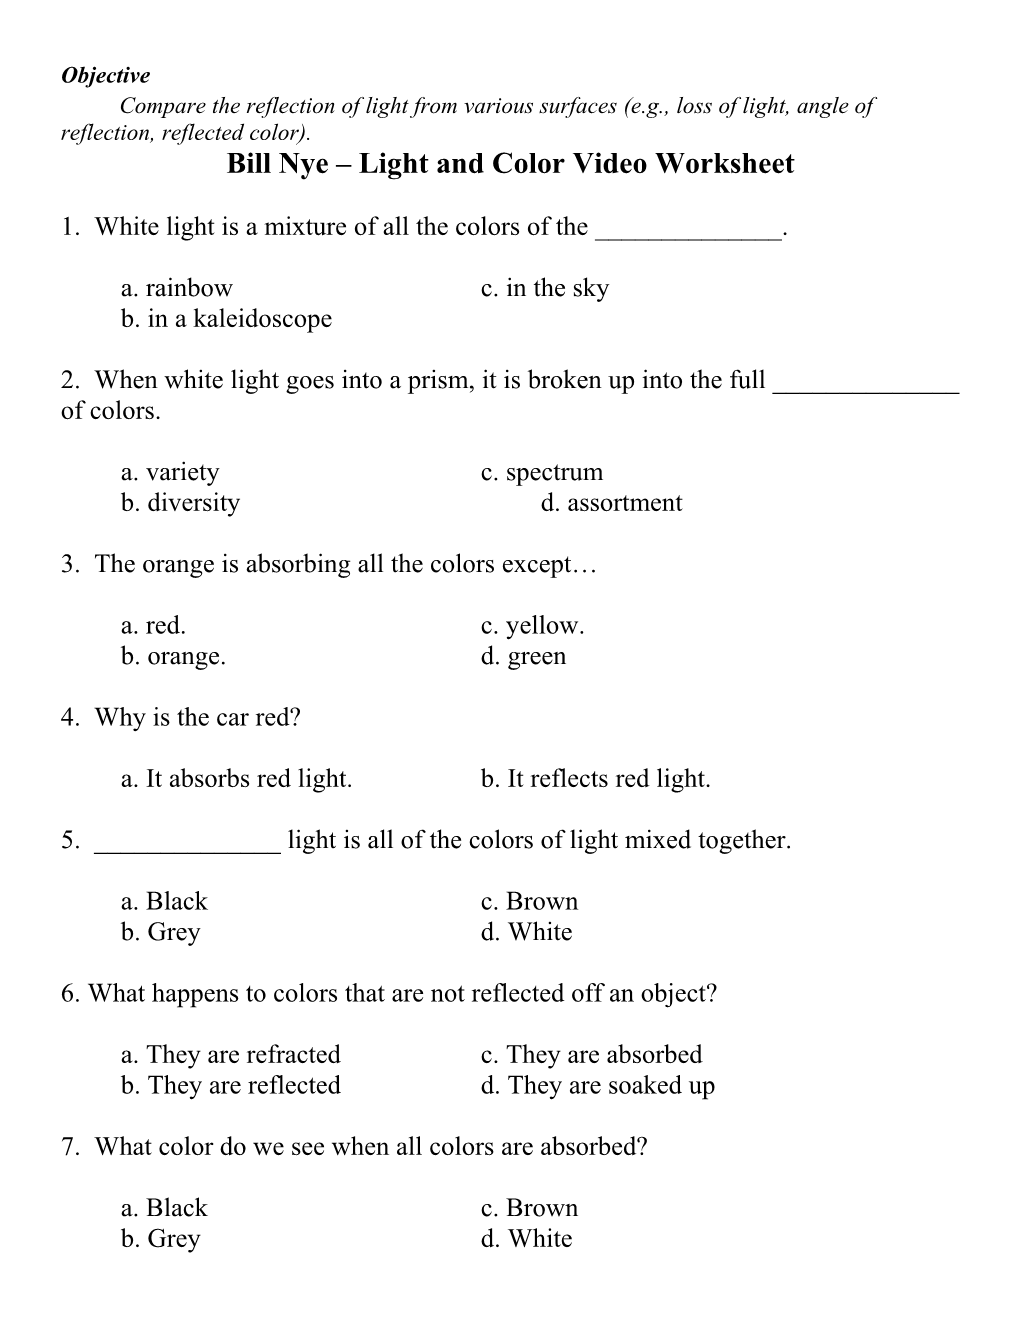 Bill Nye Light and Color Video Worksheet